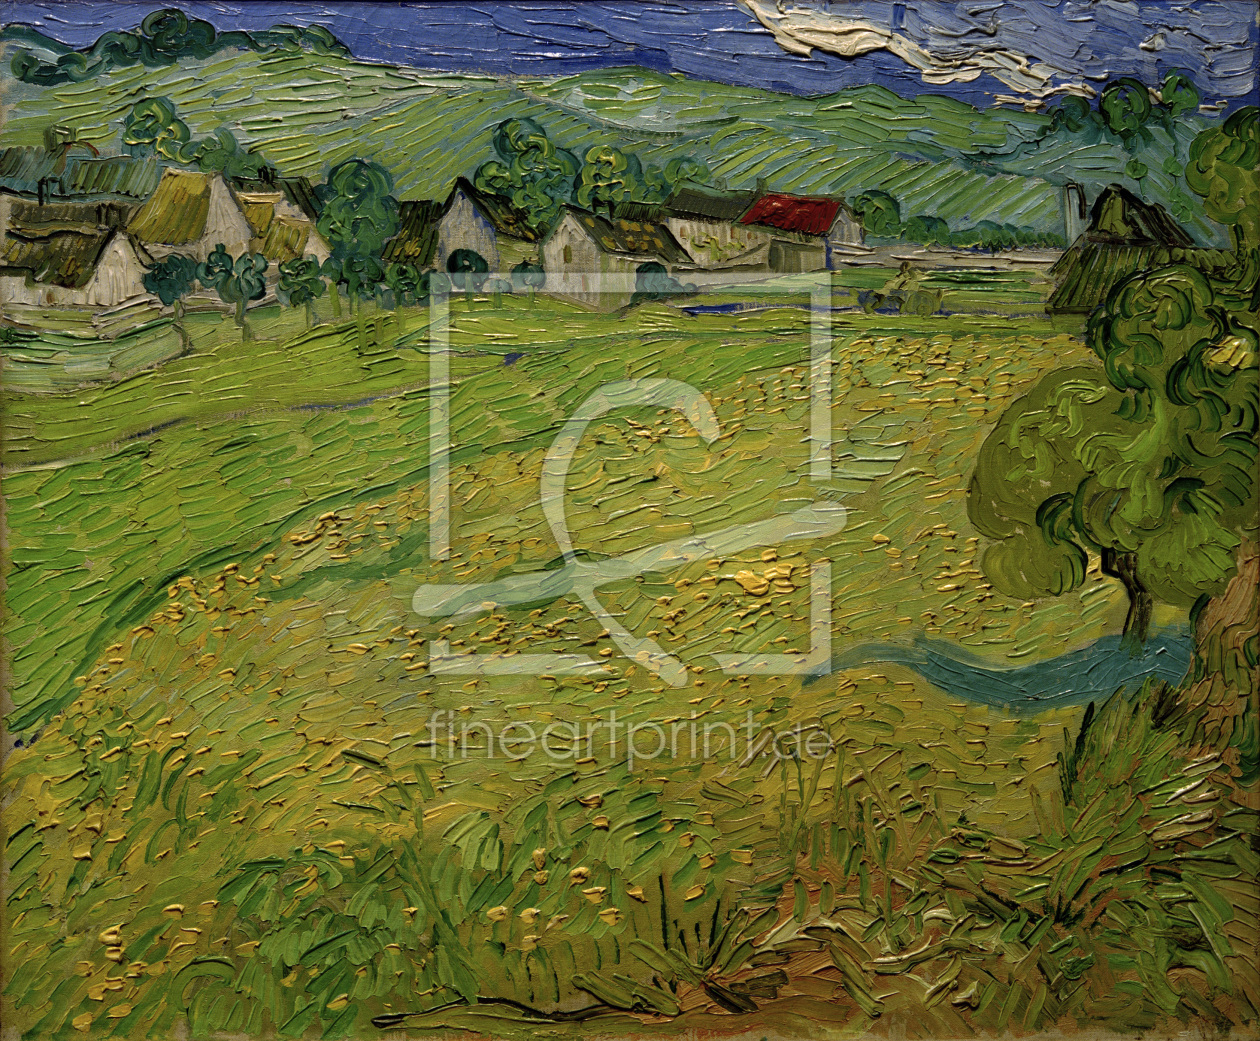 Bild-Nr.: 30003298 V.v.Gogh, Les Vessenots,Auvers/Ptg./1890 erstellt von van Gogh, Vincent